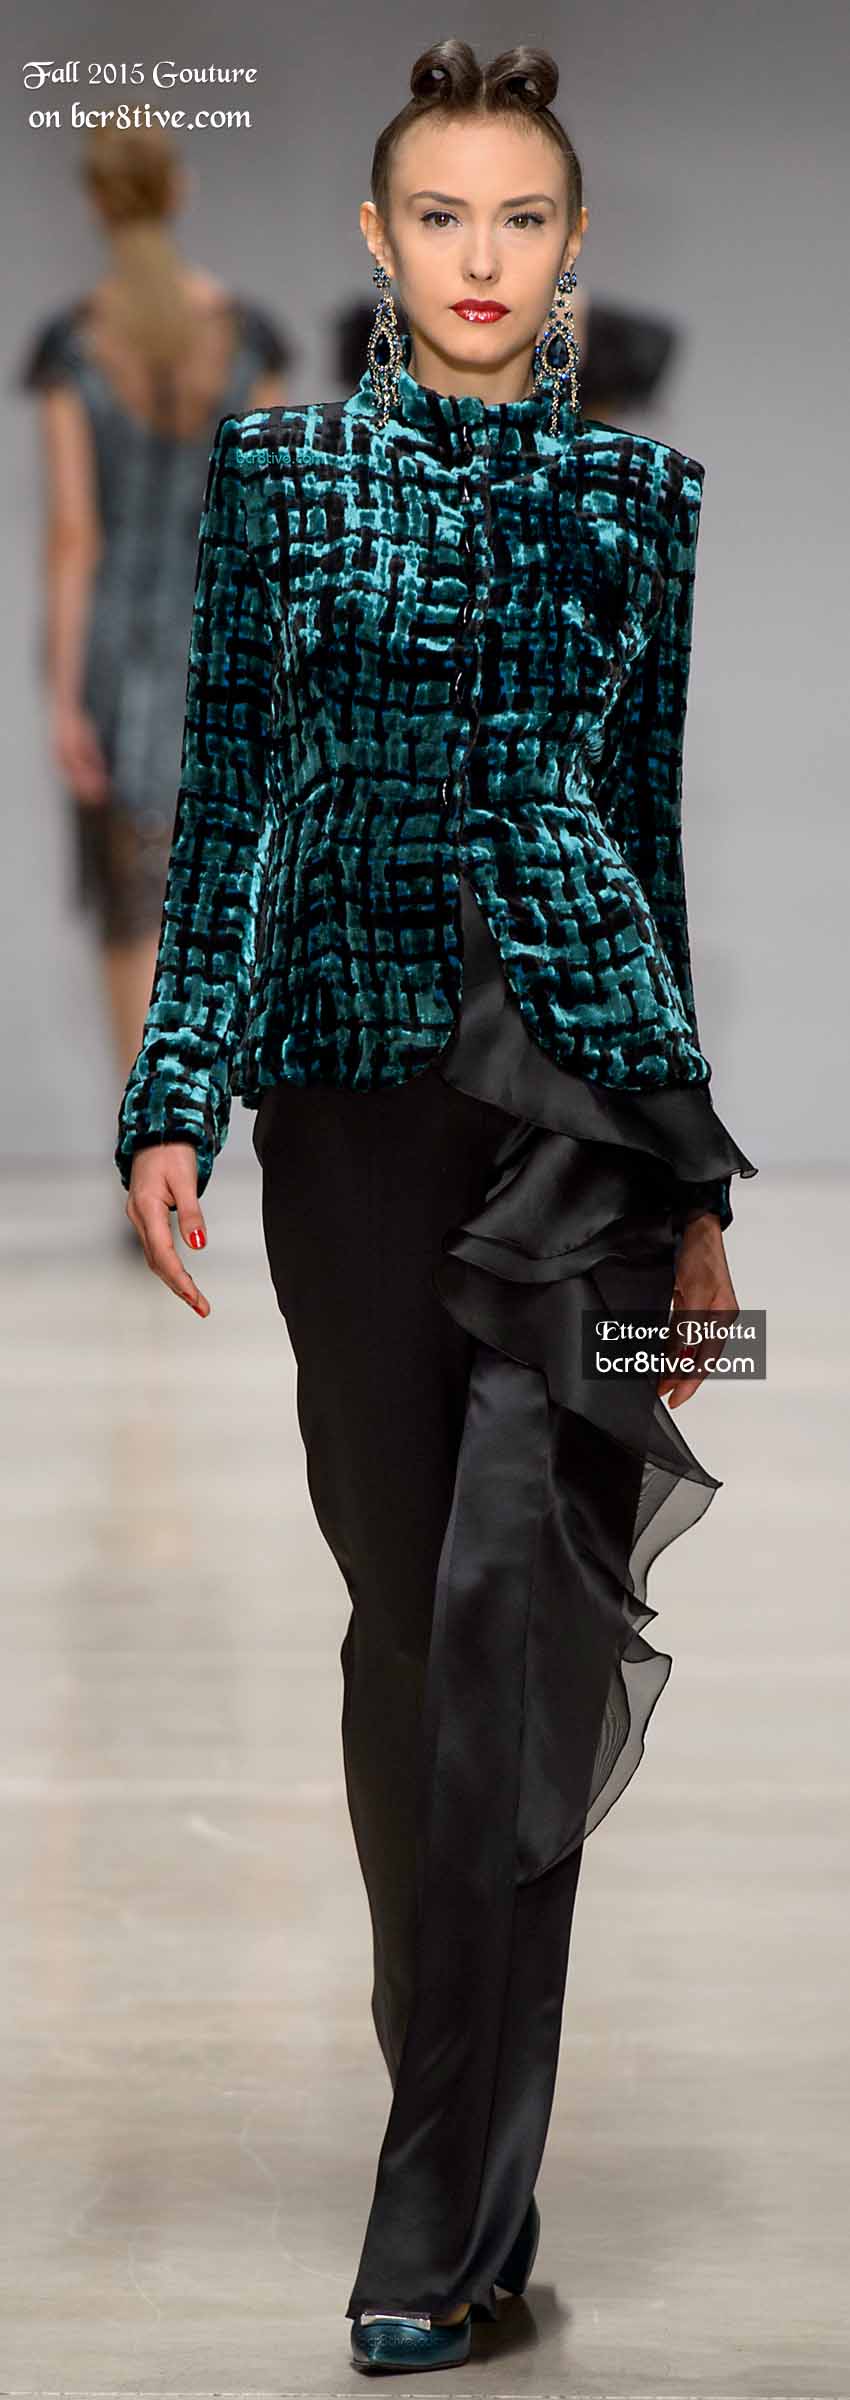 Ettore Bilotta Couture Fall 2015-16